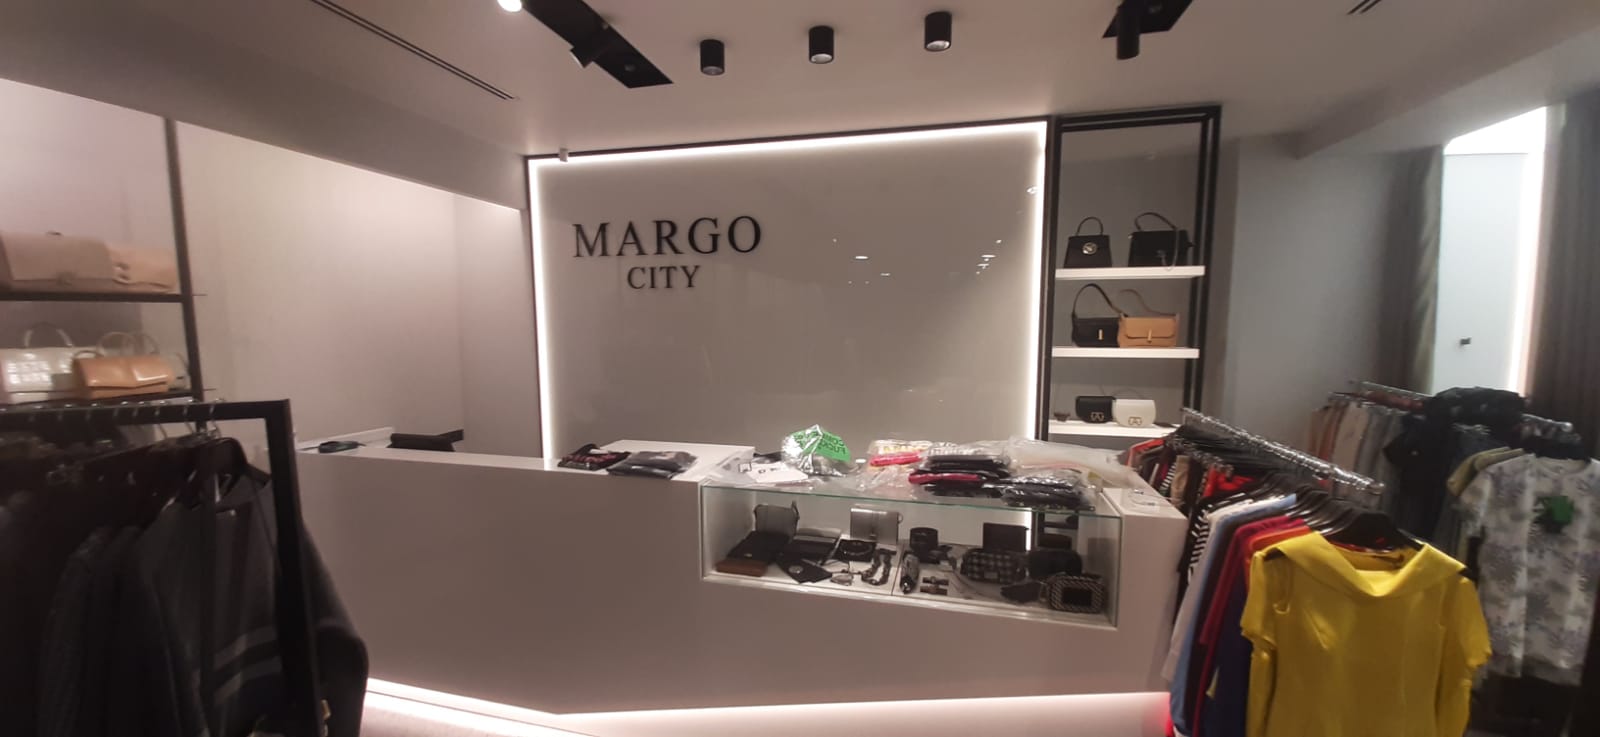   Margo7